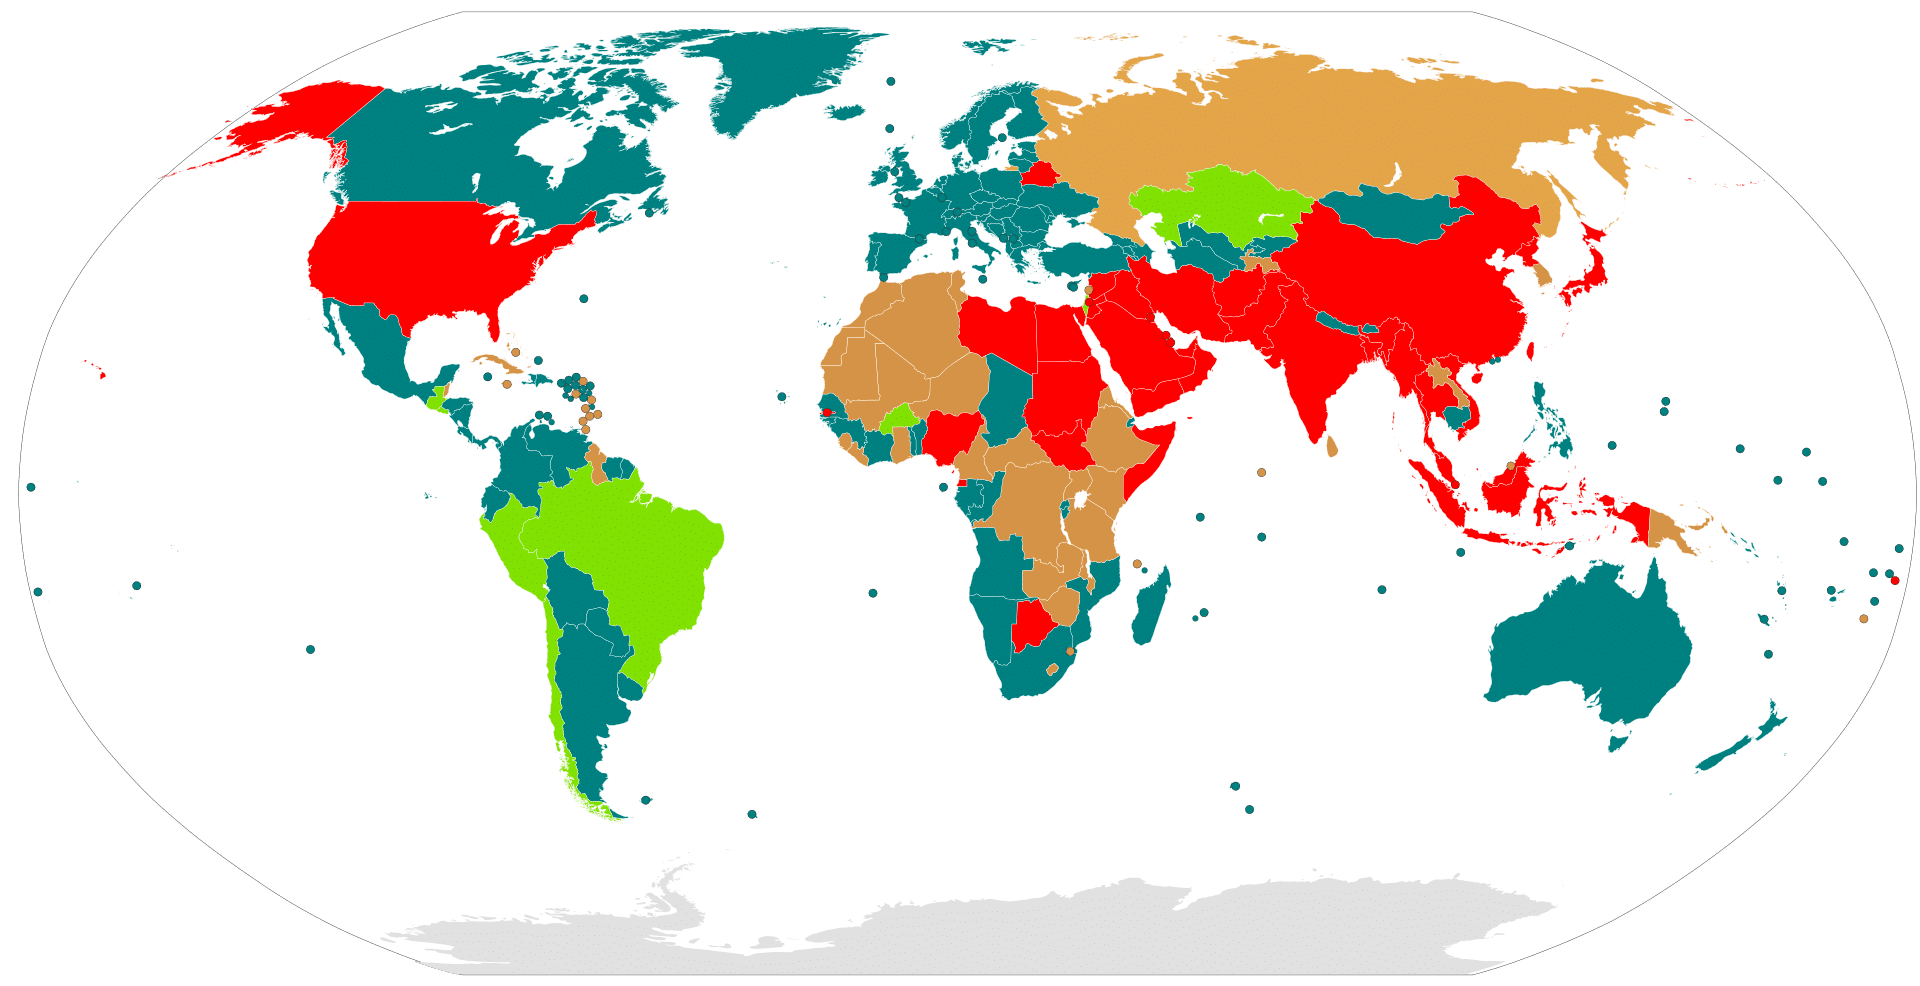 Card countries. Развитые страны на карте.